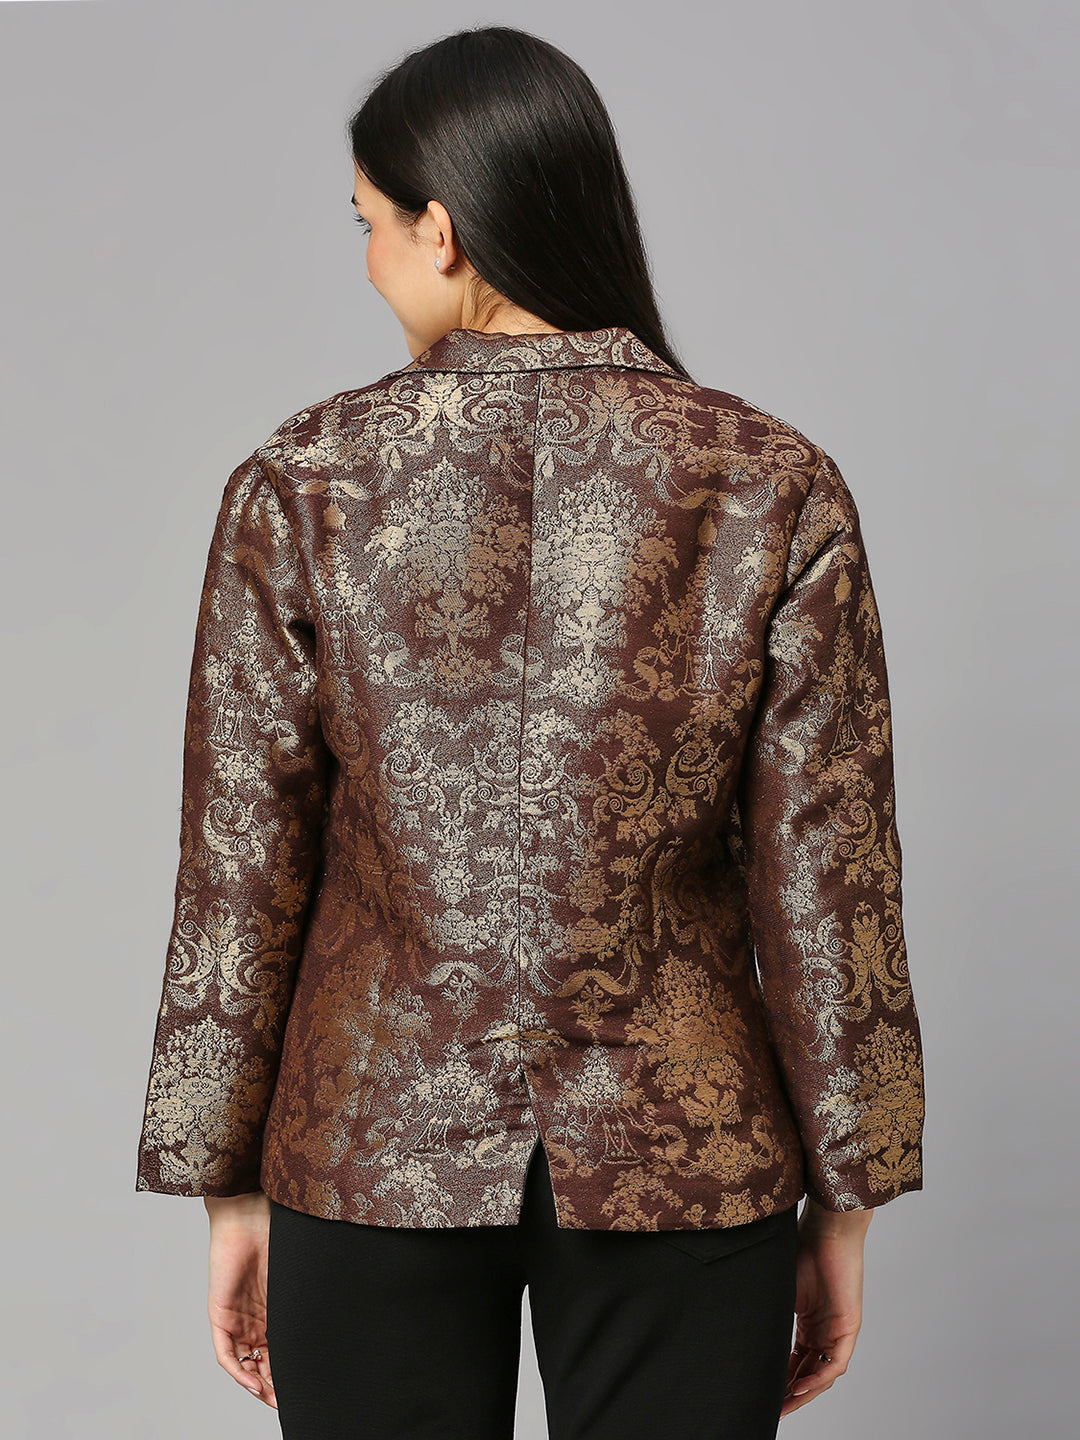 French Patterned Ornamental Brown Short Brocade Jacket